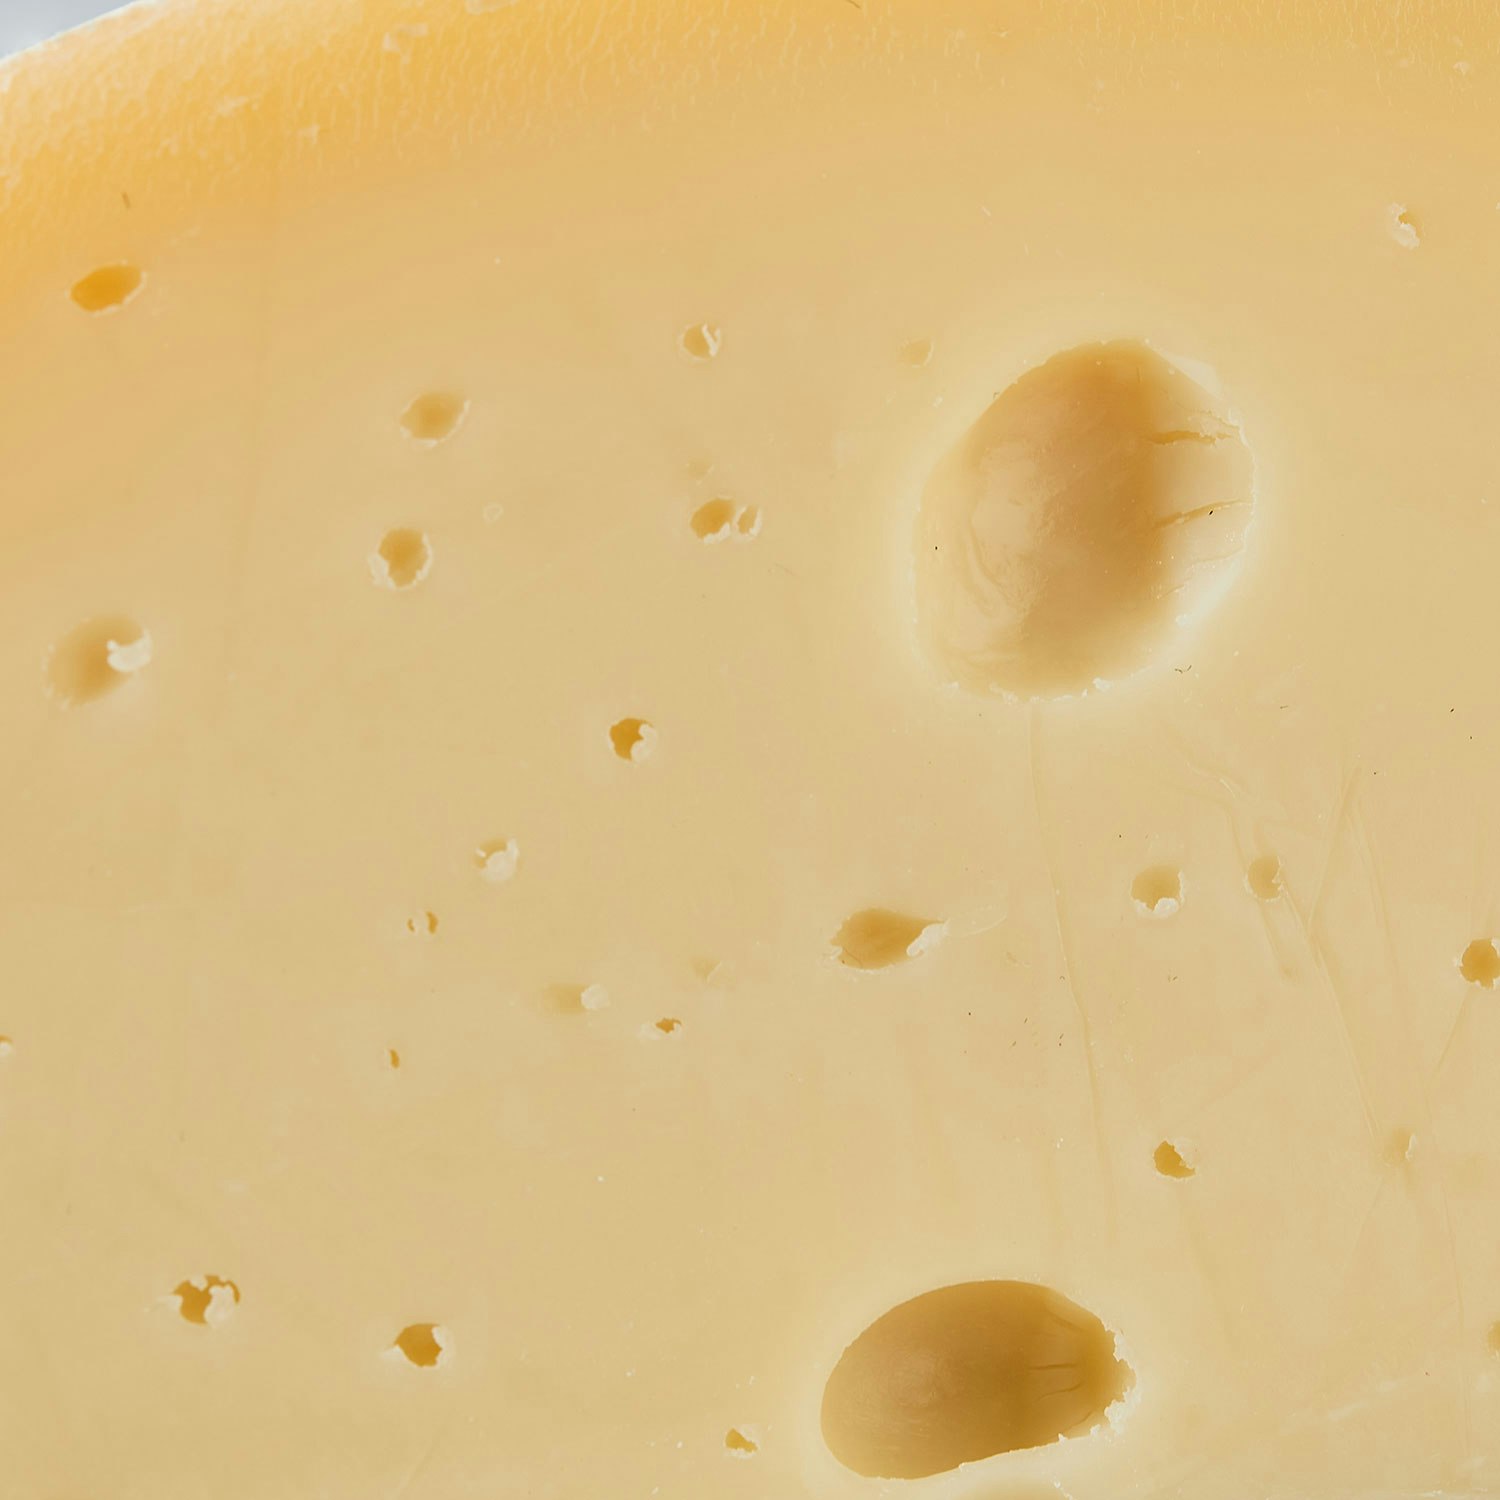 caciocavallo cheese